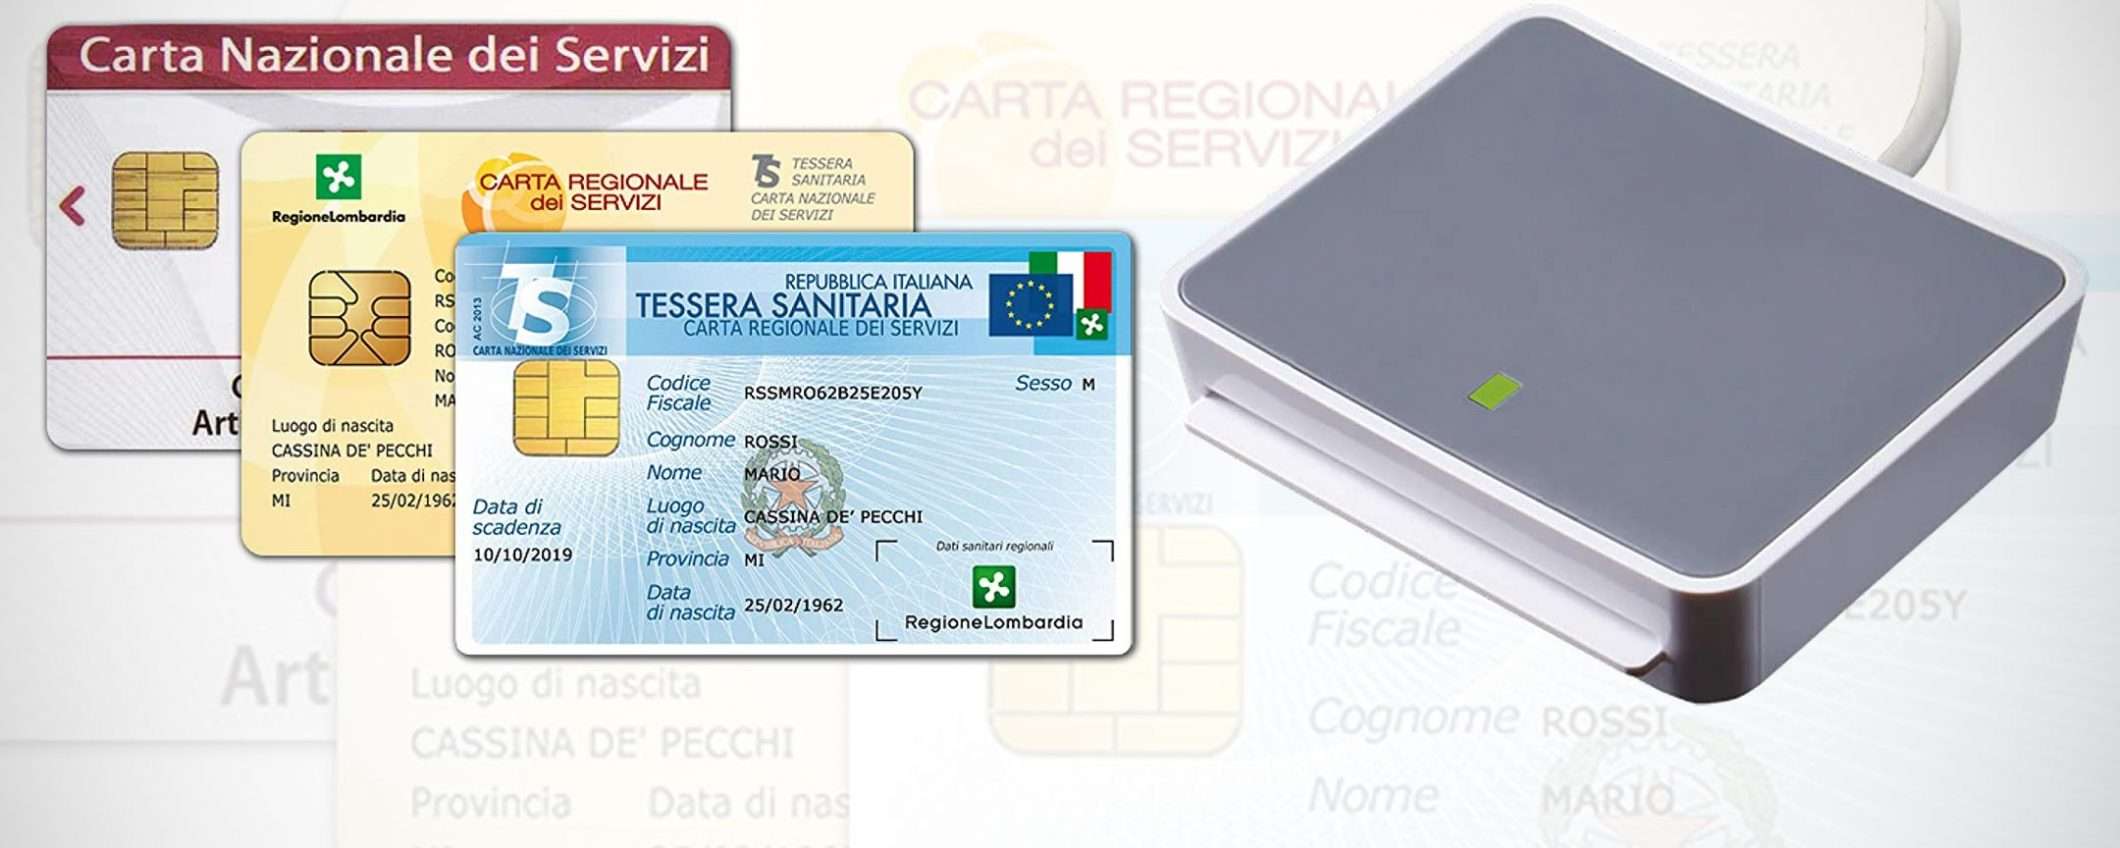 Lettore smart card (CNS, CRS, TSN): offerta lampo